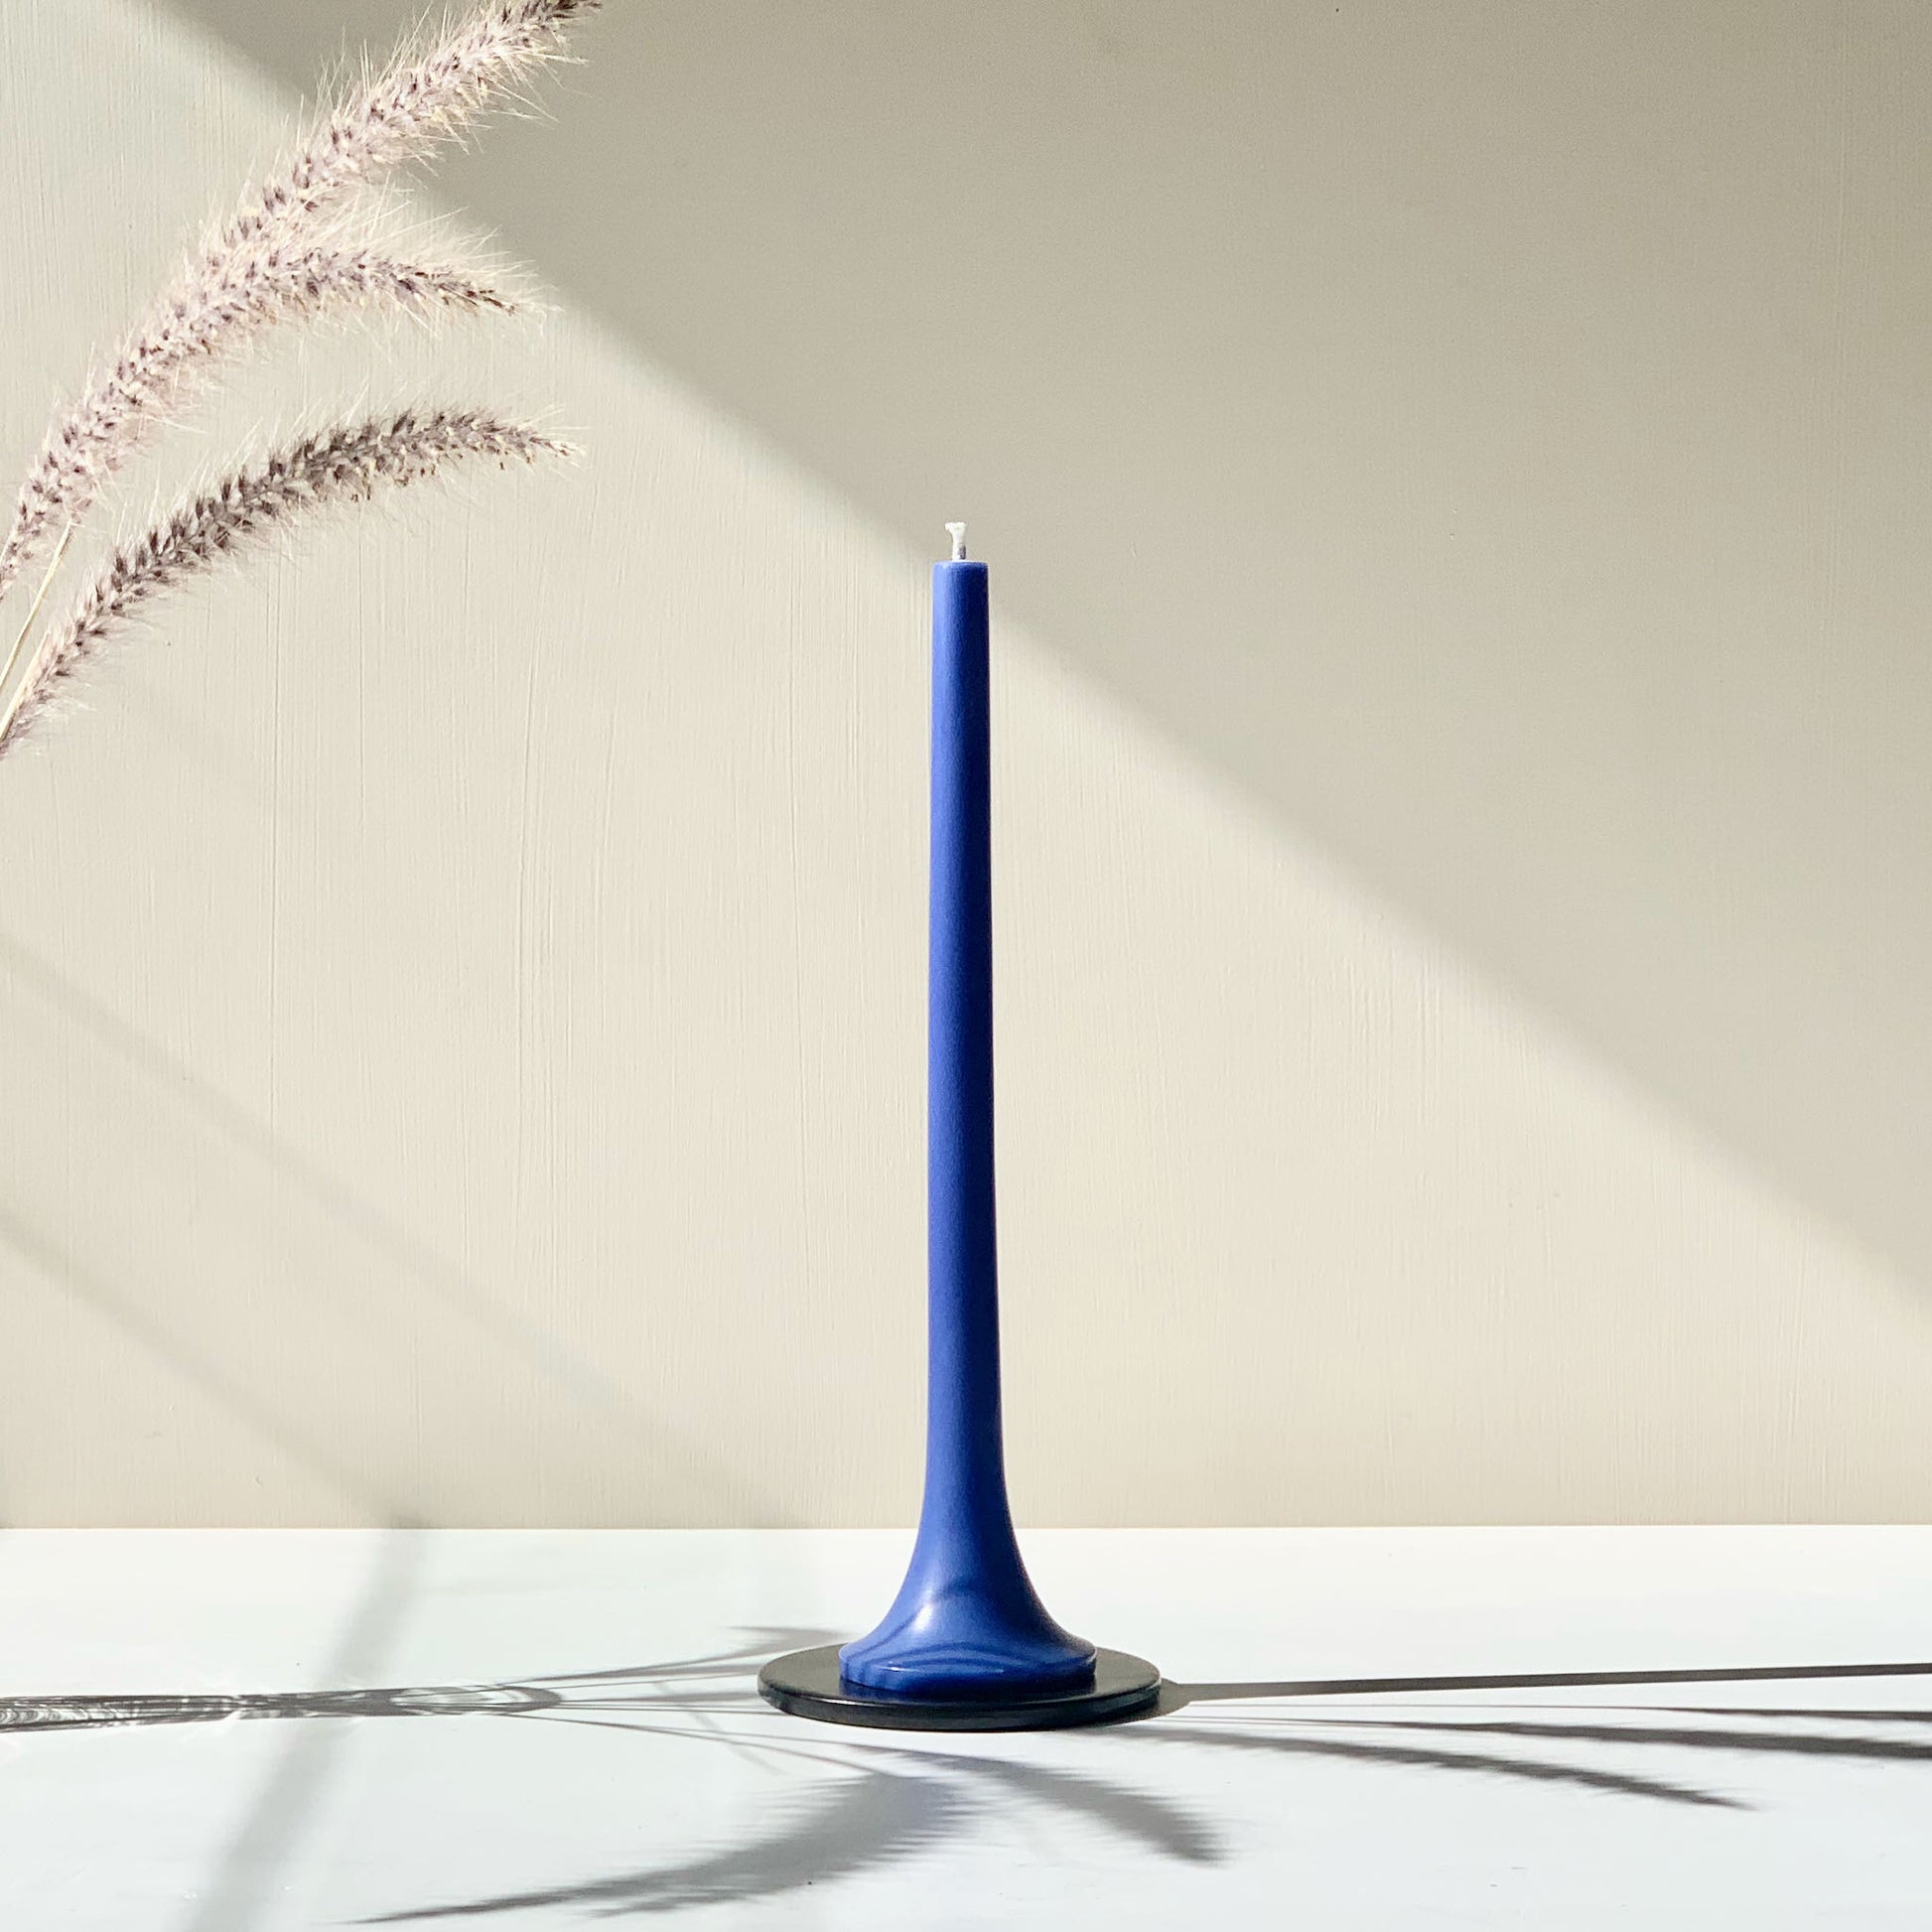 Stylish blue taper candle